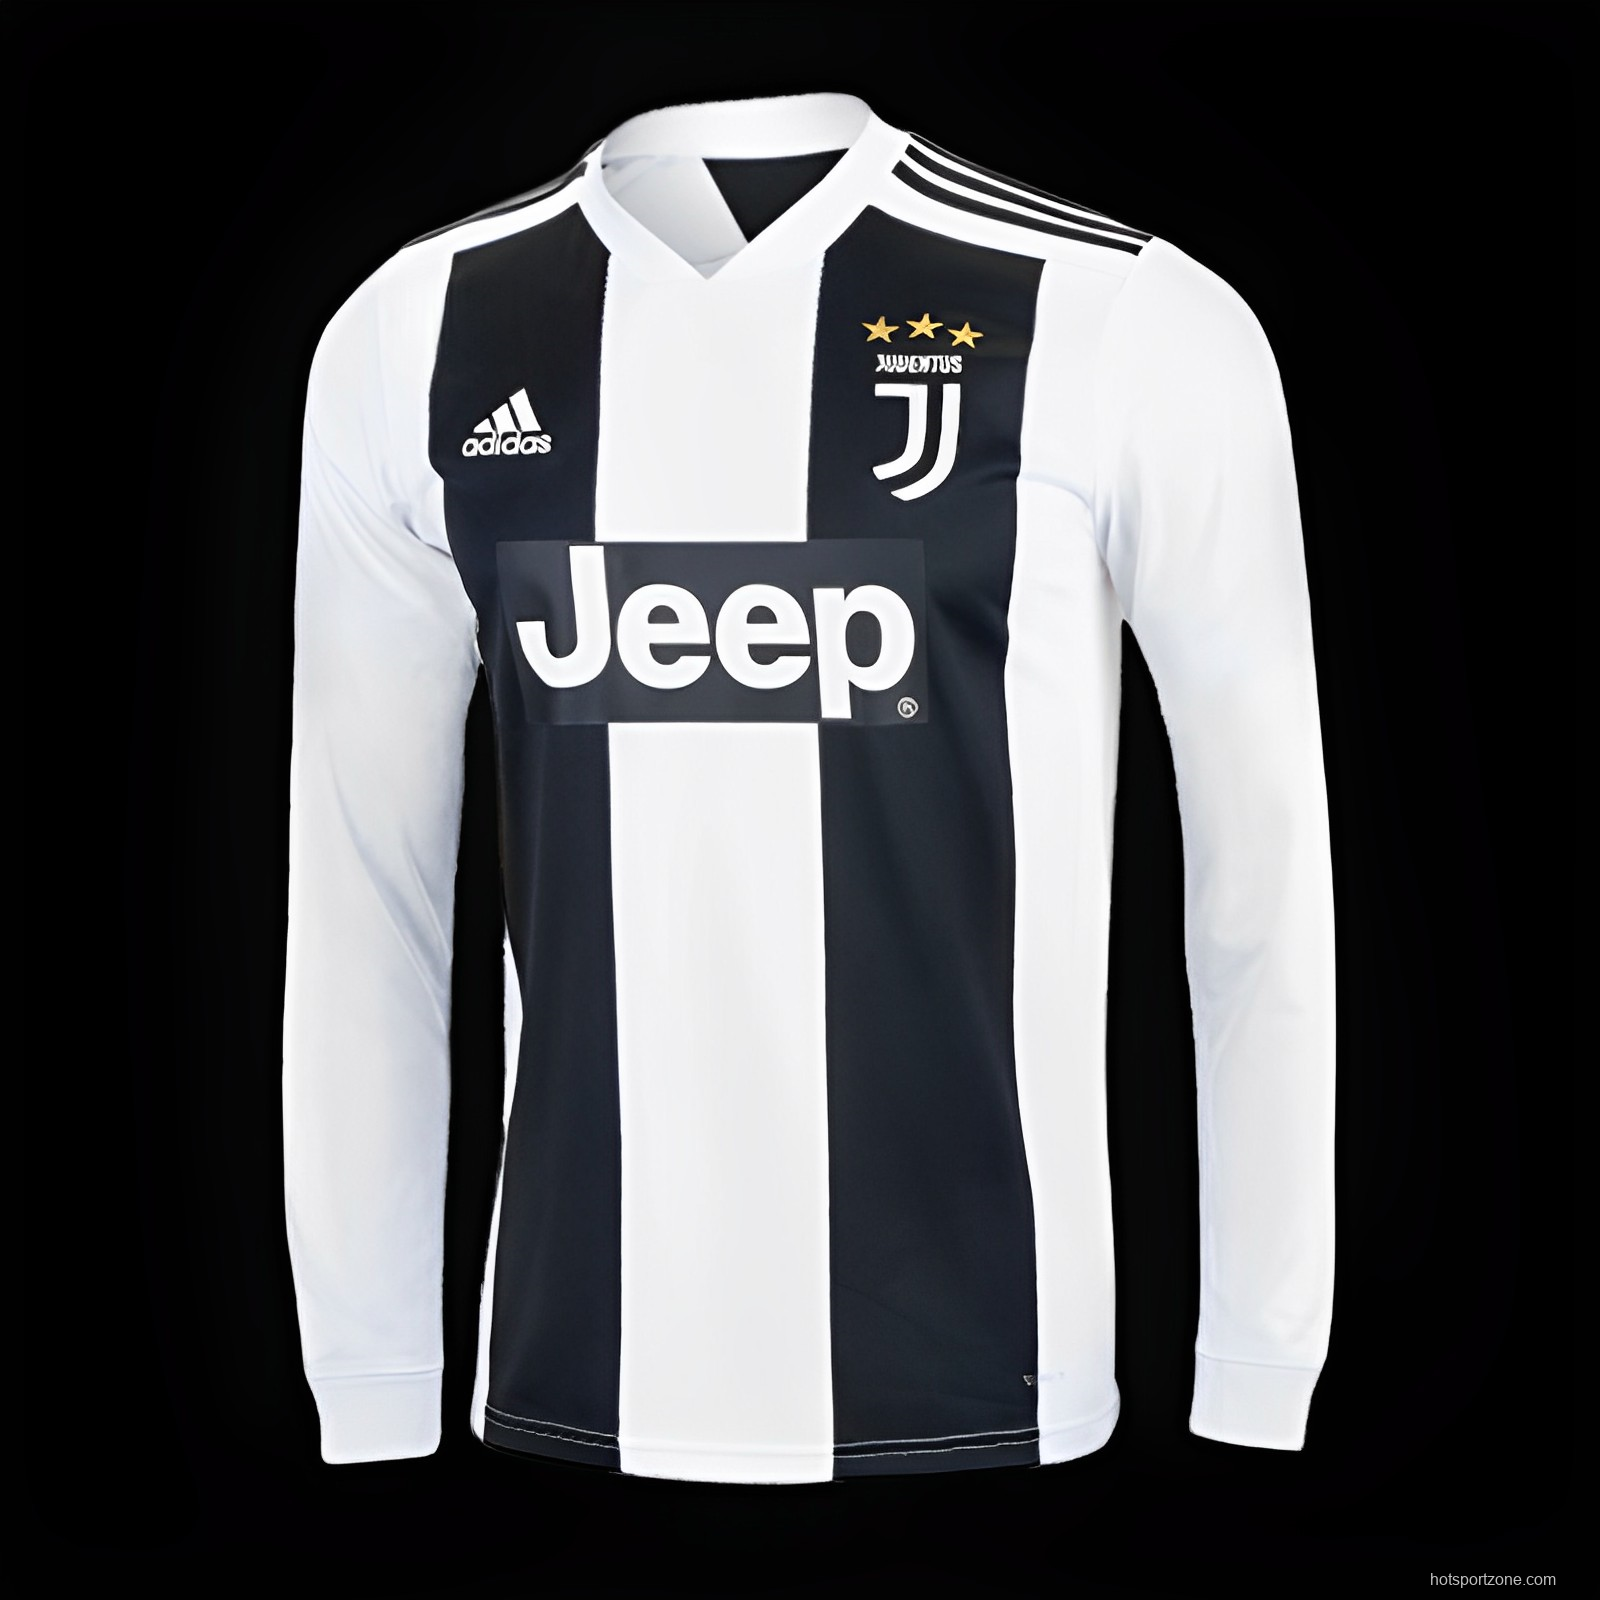 Player Version Retro 18/19 Juventus Home Long Sleeve Jersey